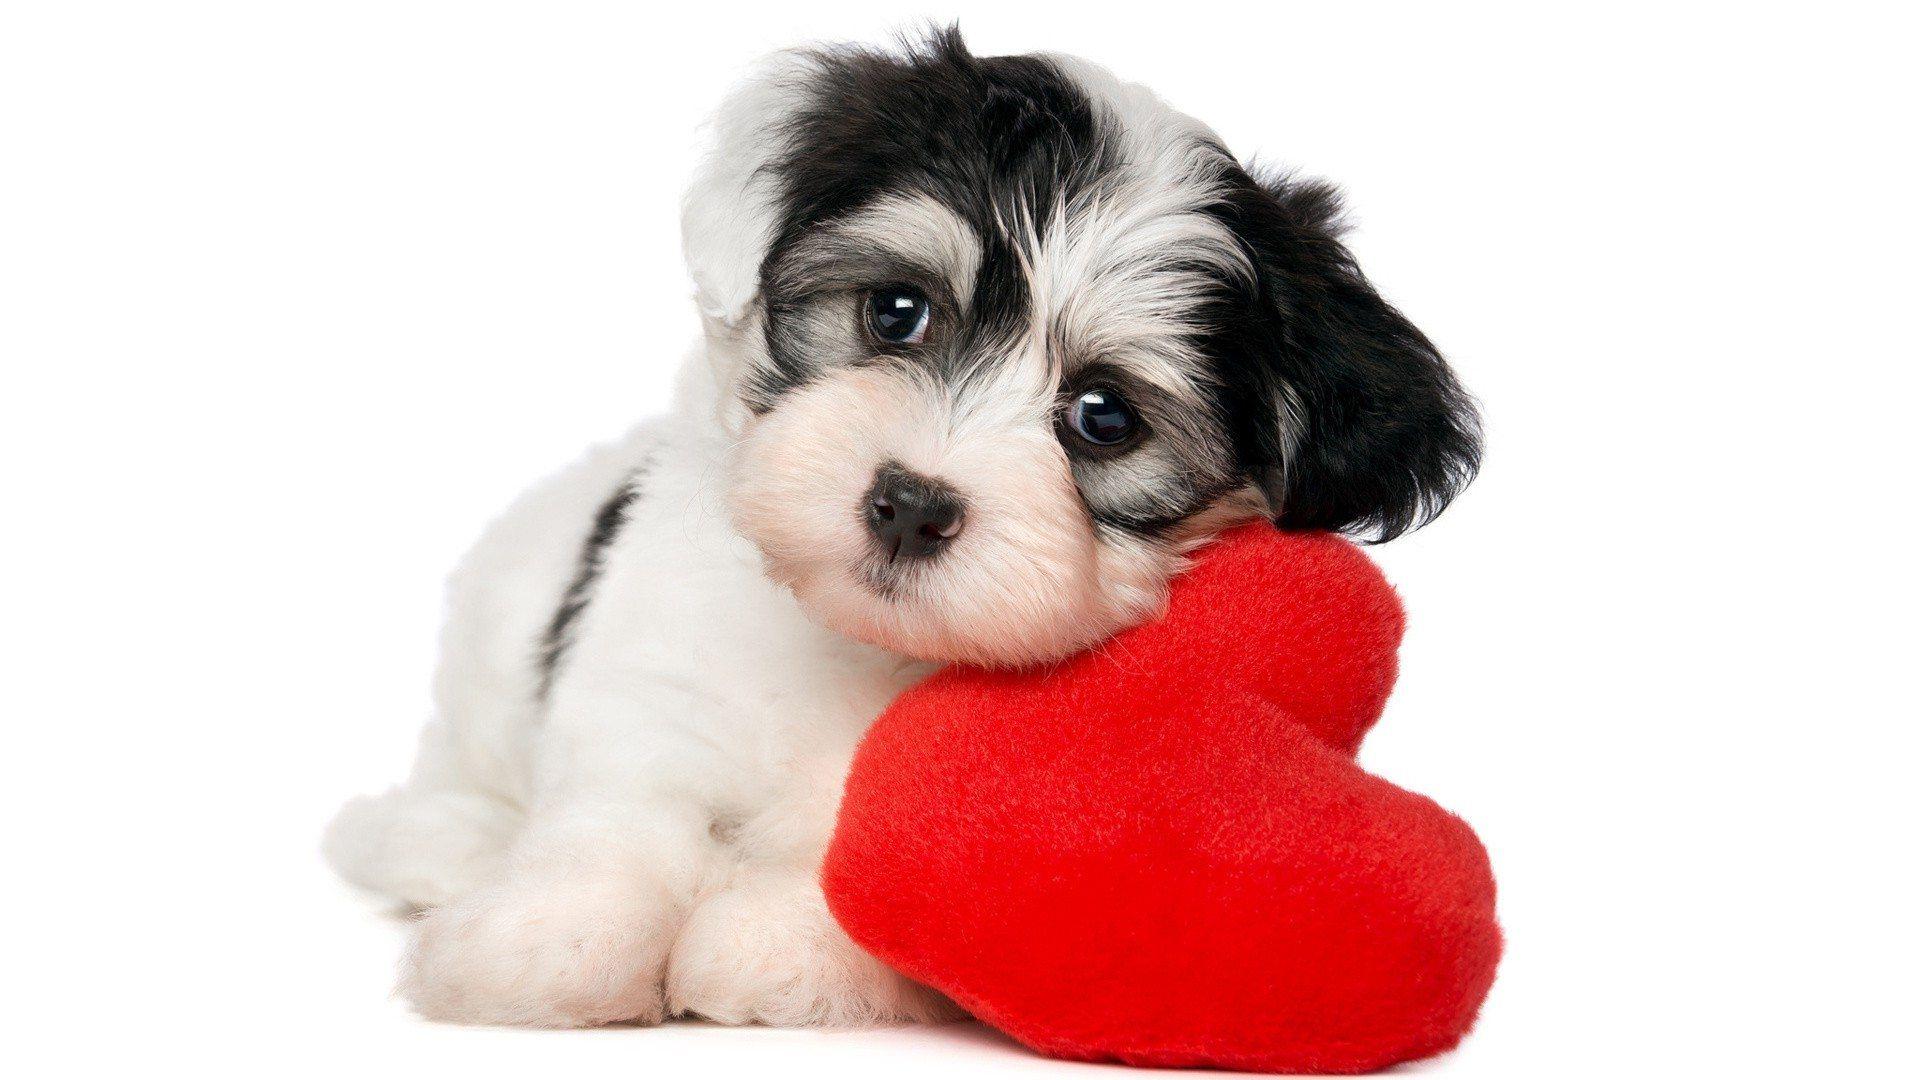 Rating ascendskills.com, C/ Happy valentines dog